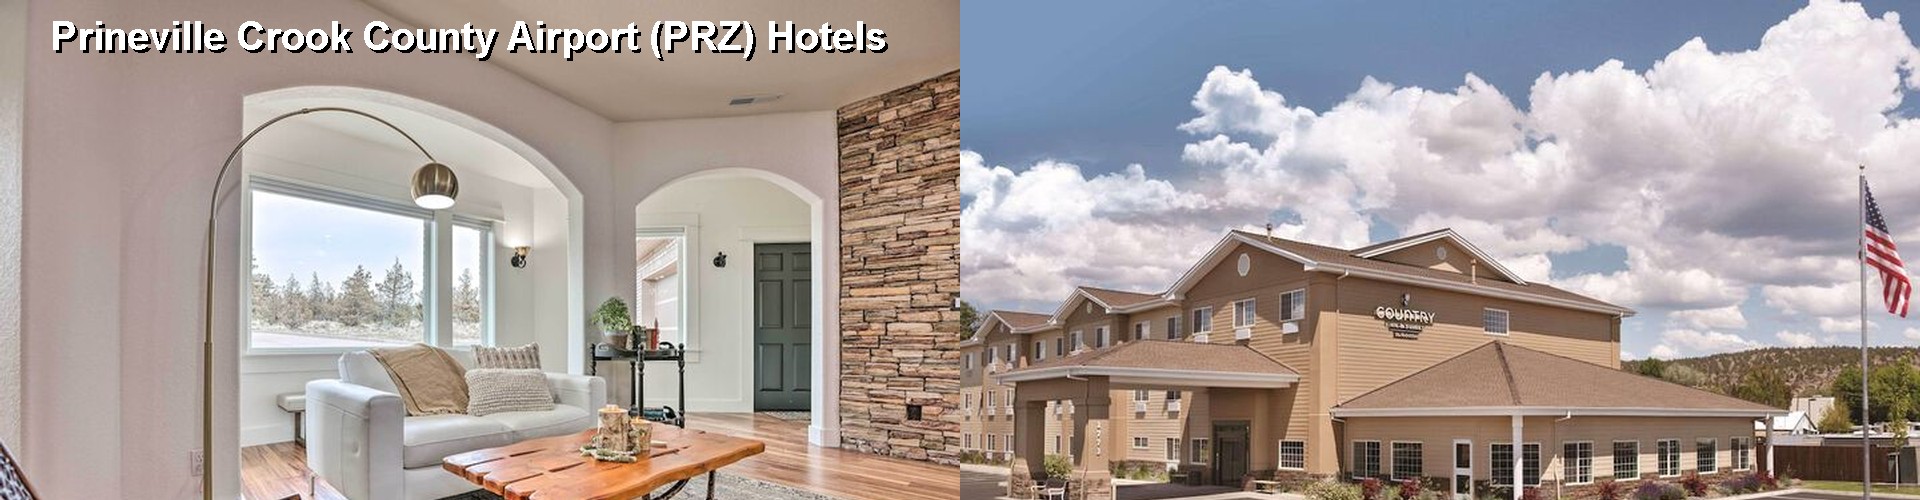 3 Best Hotels near Prineville Crook County Airport (PRZ)